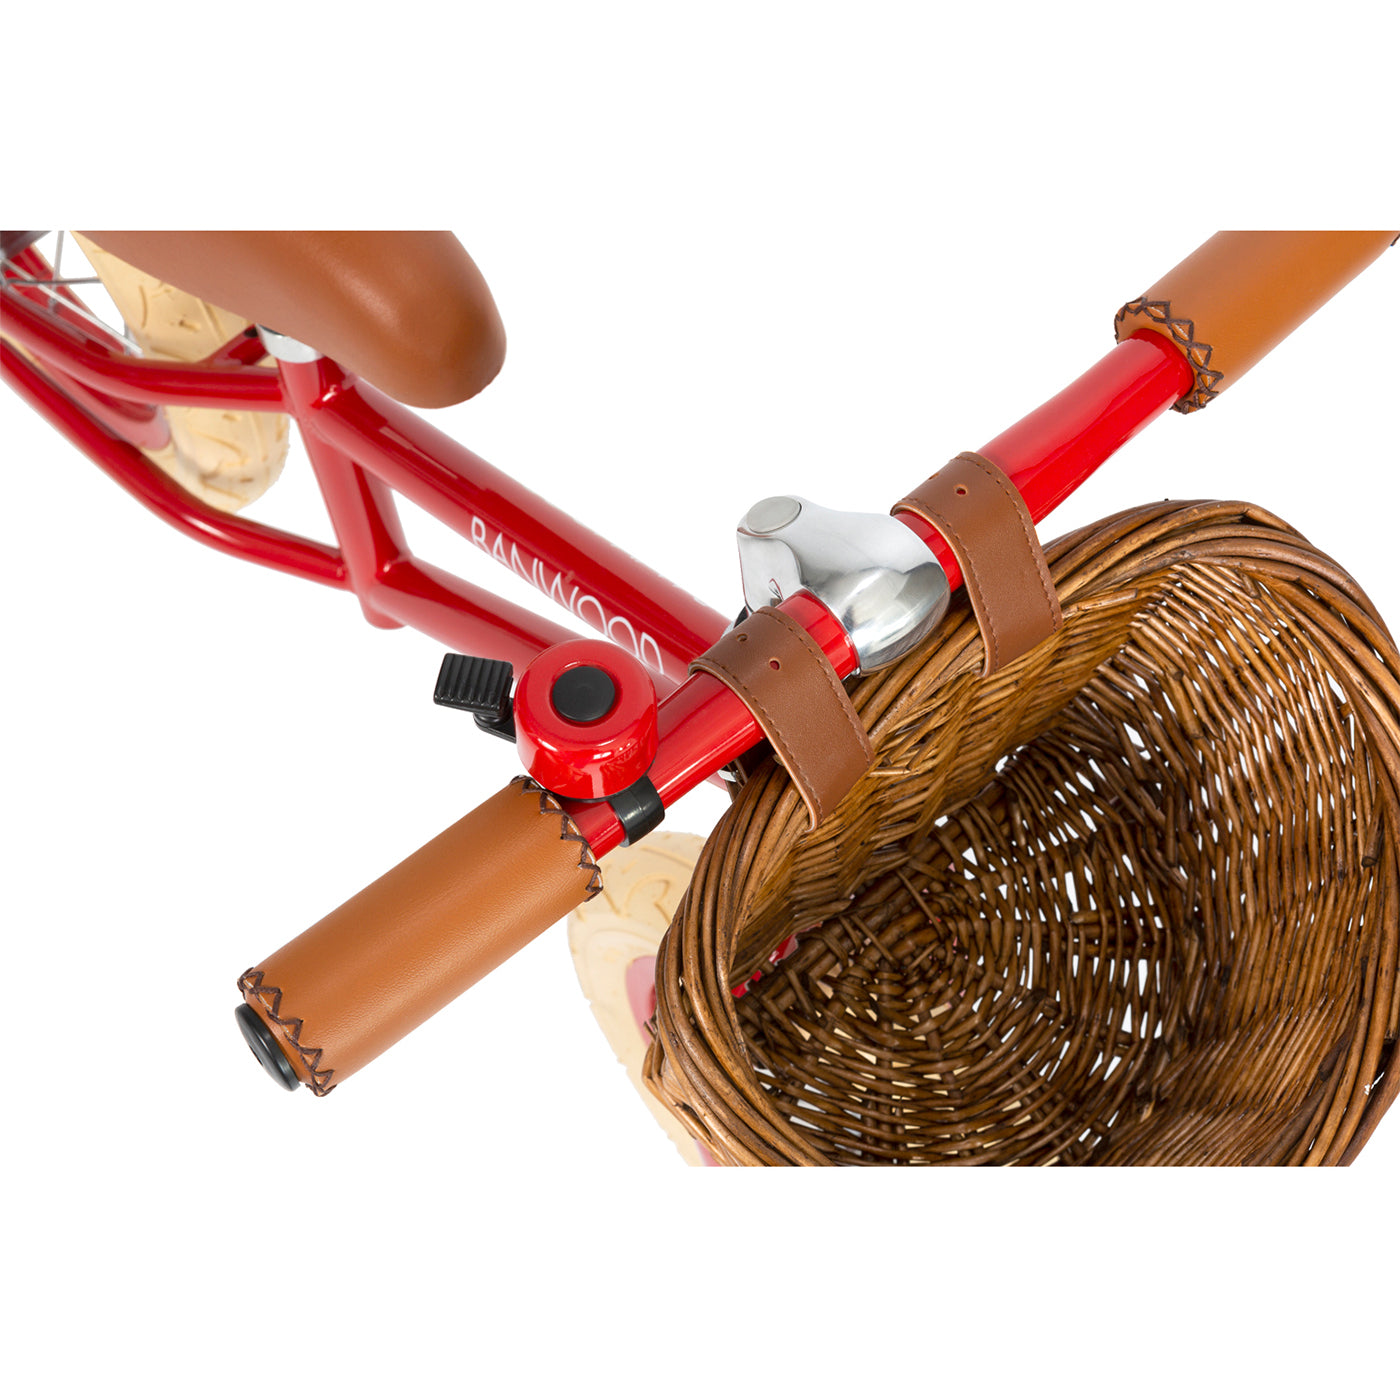 Banwood Vintage Denge Bisikleti | Kırmızı